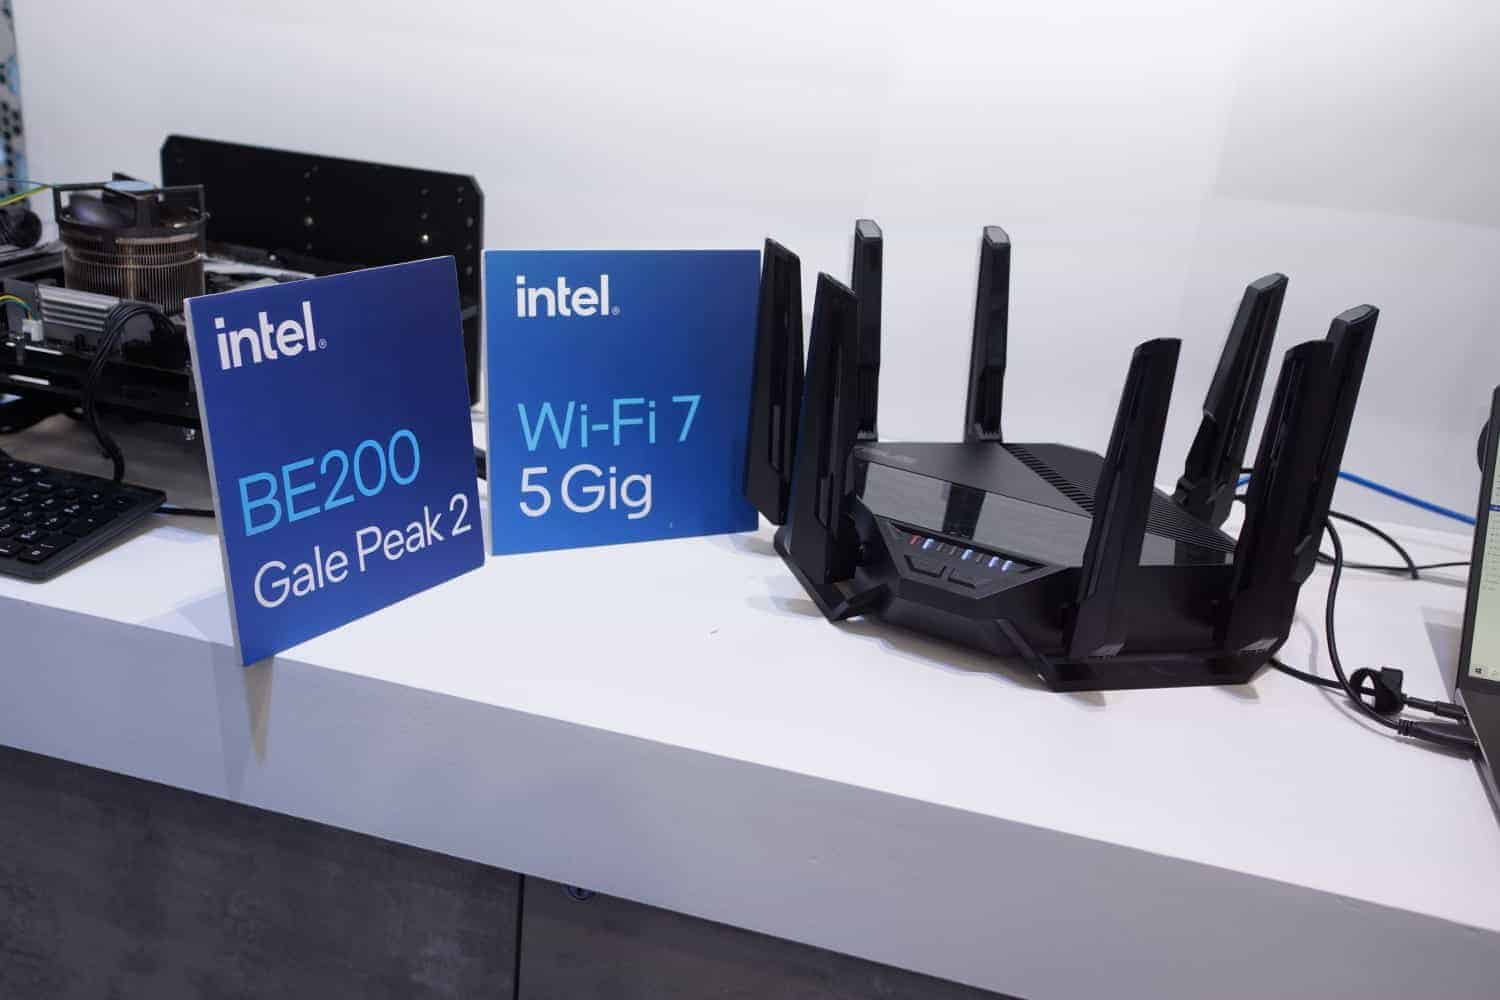 Intel Wi-Fi 7 BE200 & BE202 M.2 2230 Modules Revealed – Comparison vs AX210 & AX411